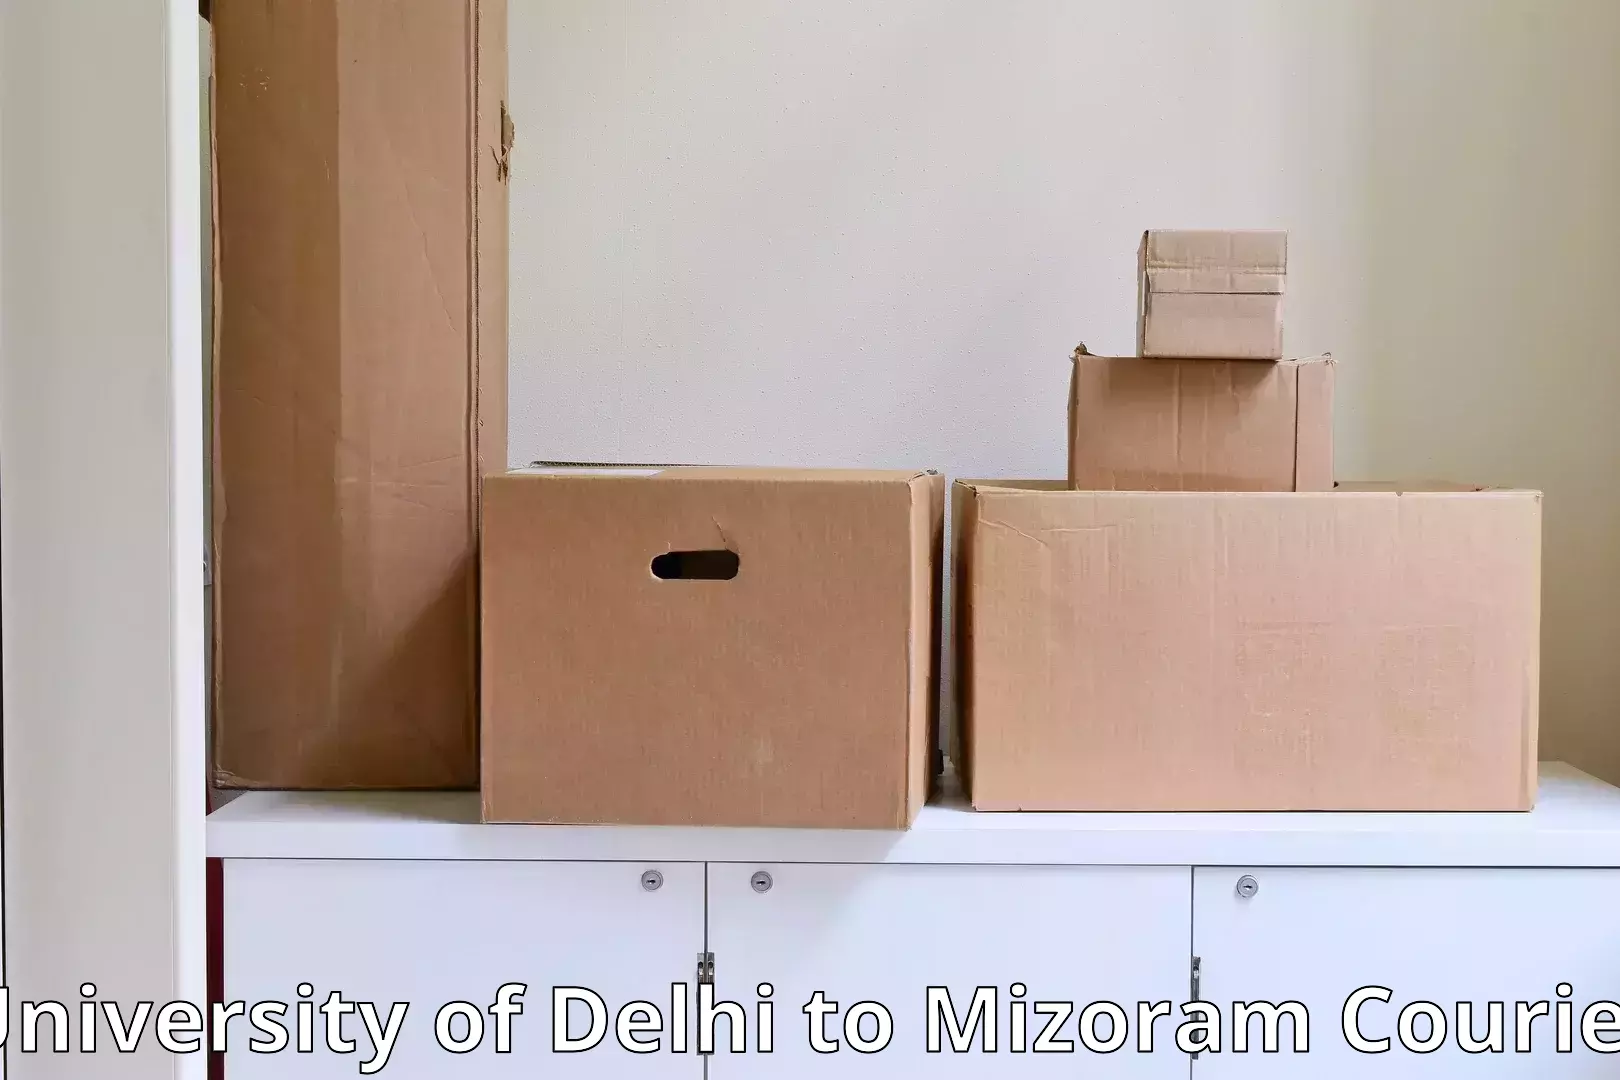 Professional moving company University of Delhi to Mizoram